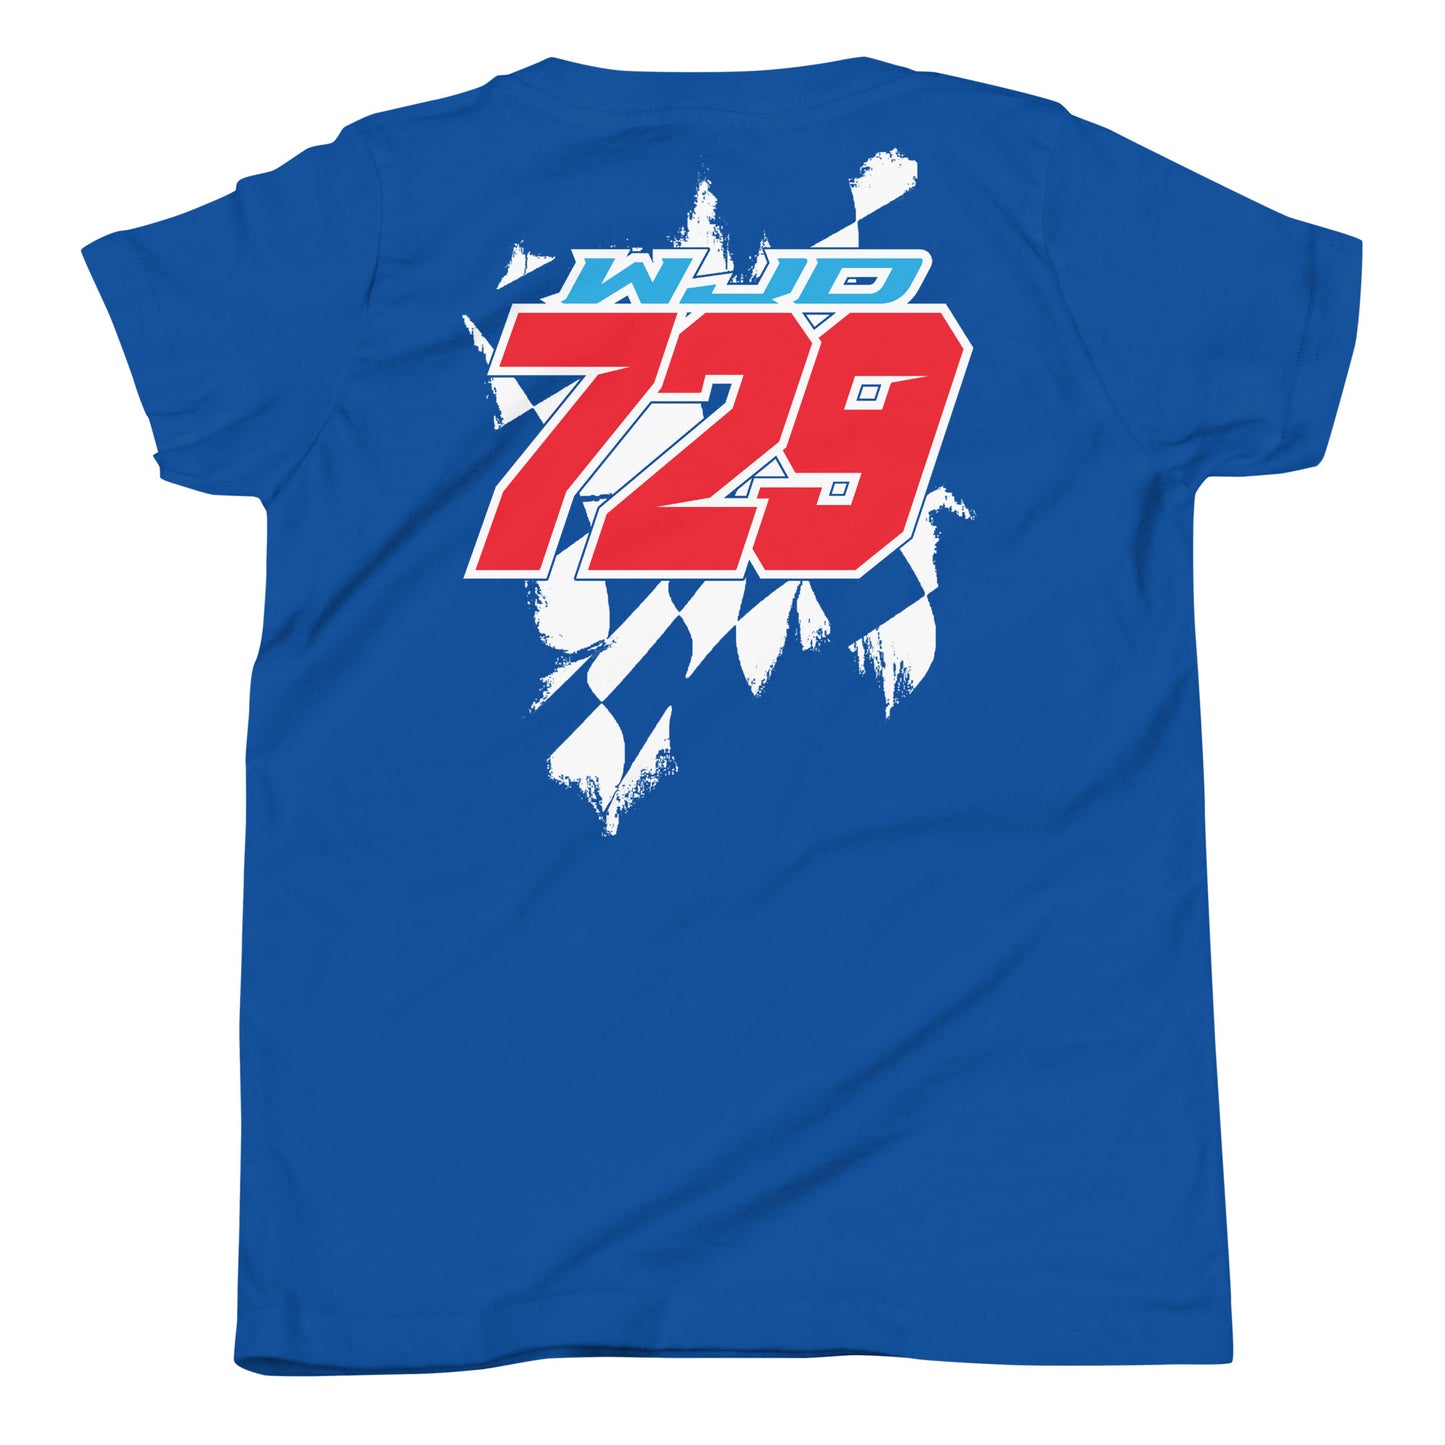 WJD 729 YOUTH T-Shirt